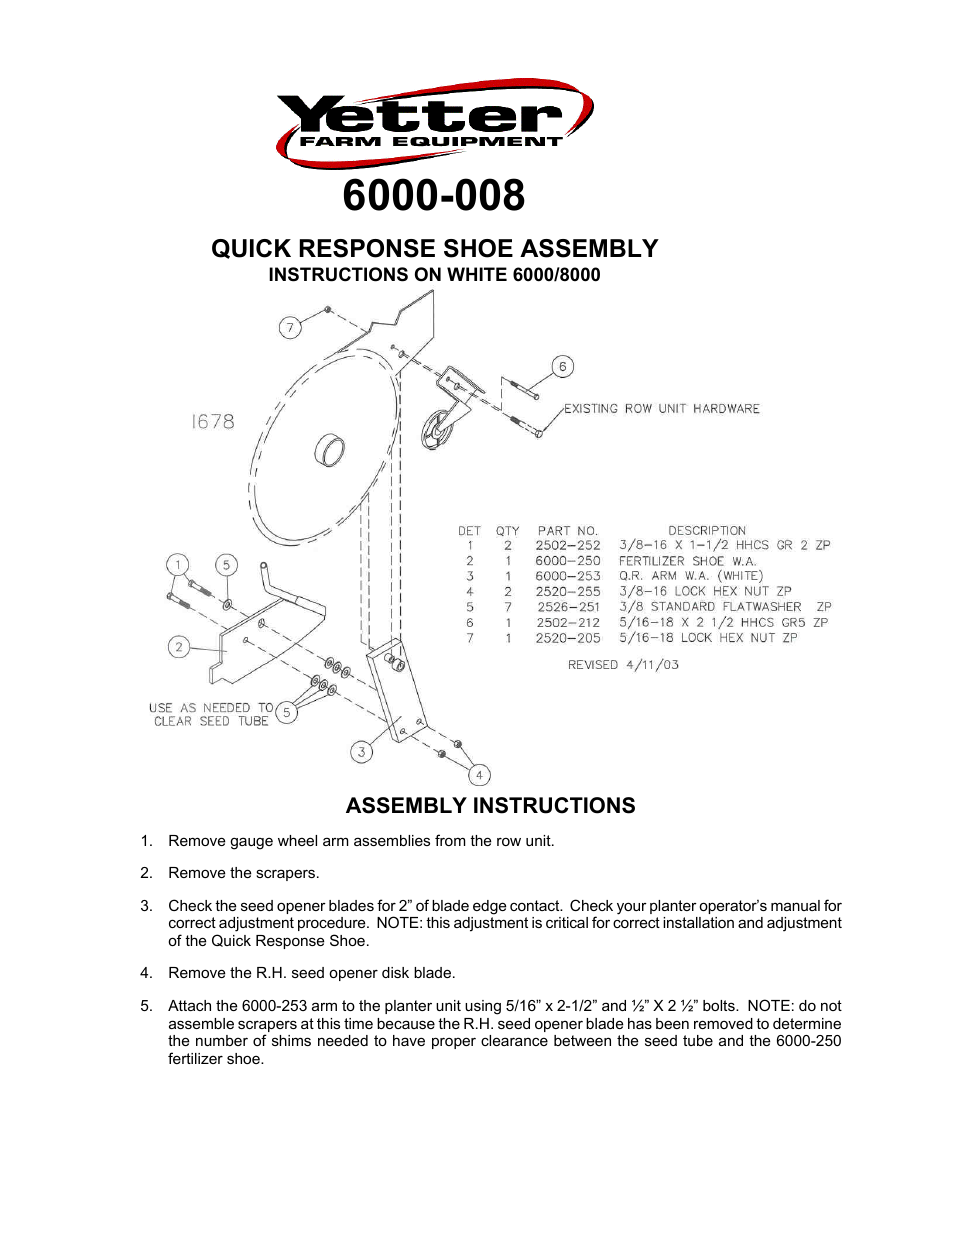 6000-008 Quick Response Shoe Assembly - White 6000/8000